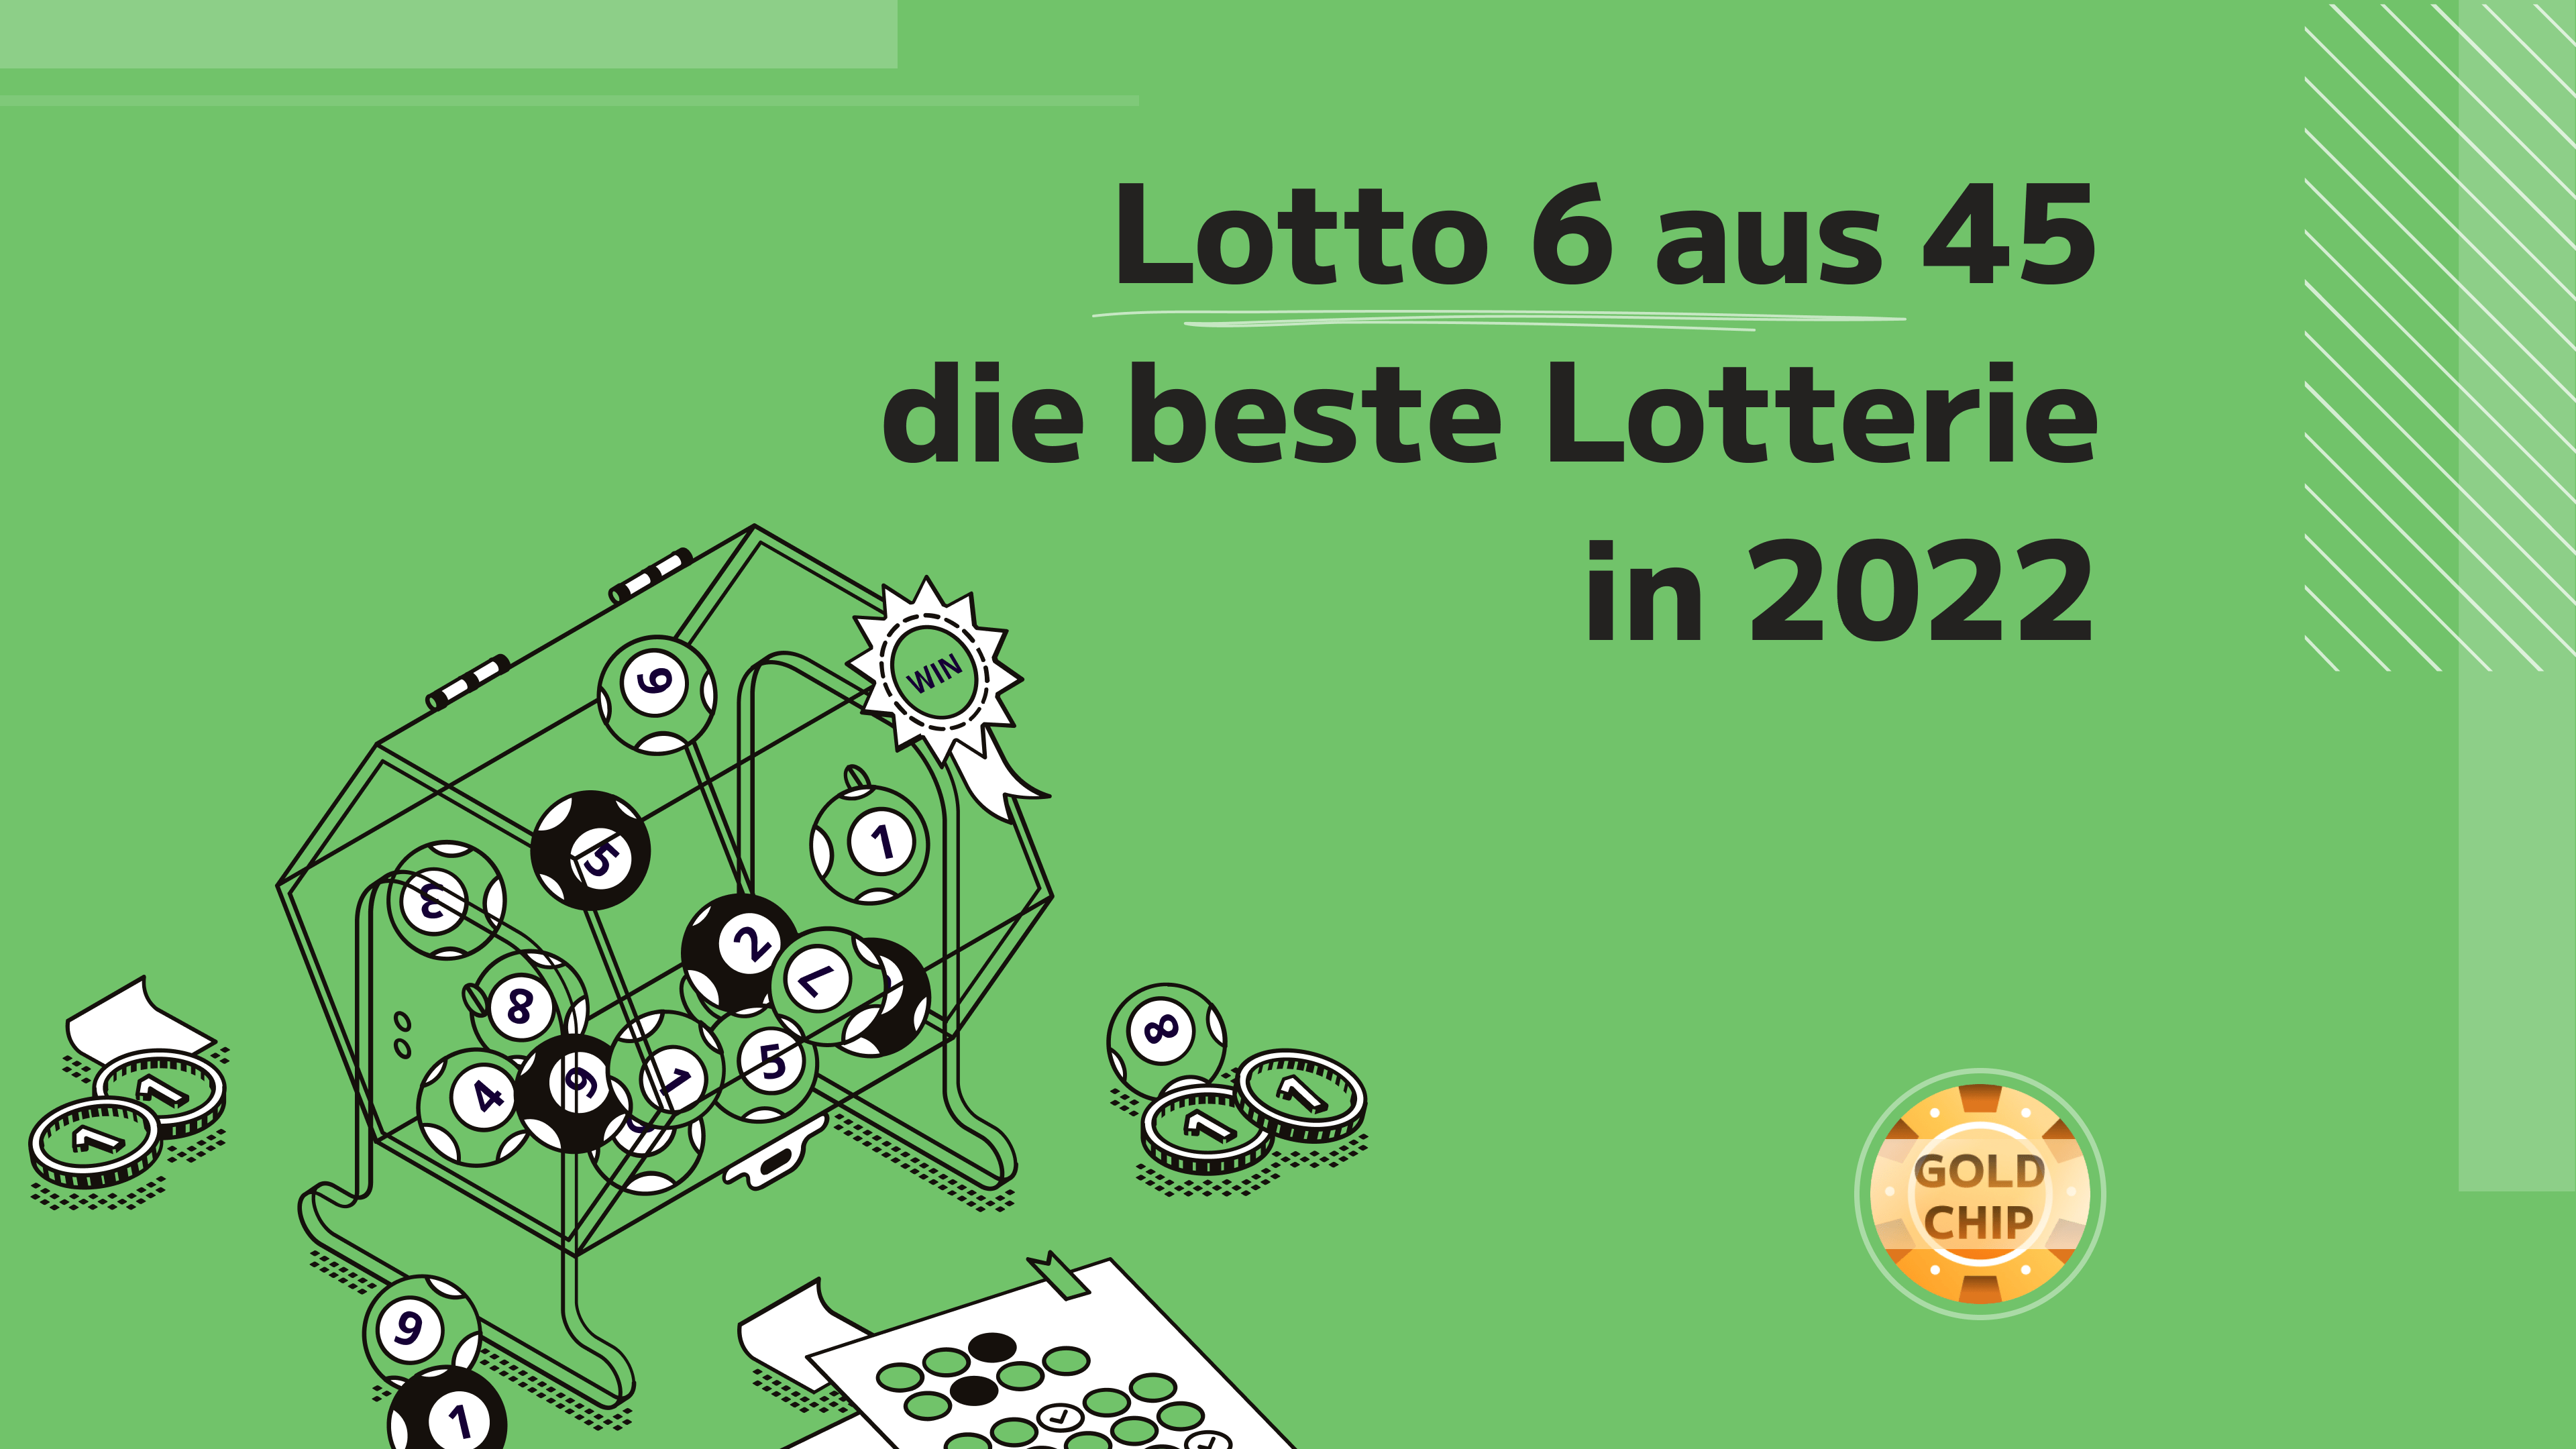 Lotto 6 aus 45 die beste Lotterie